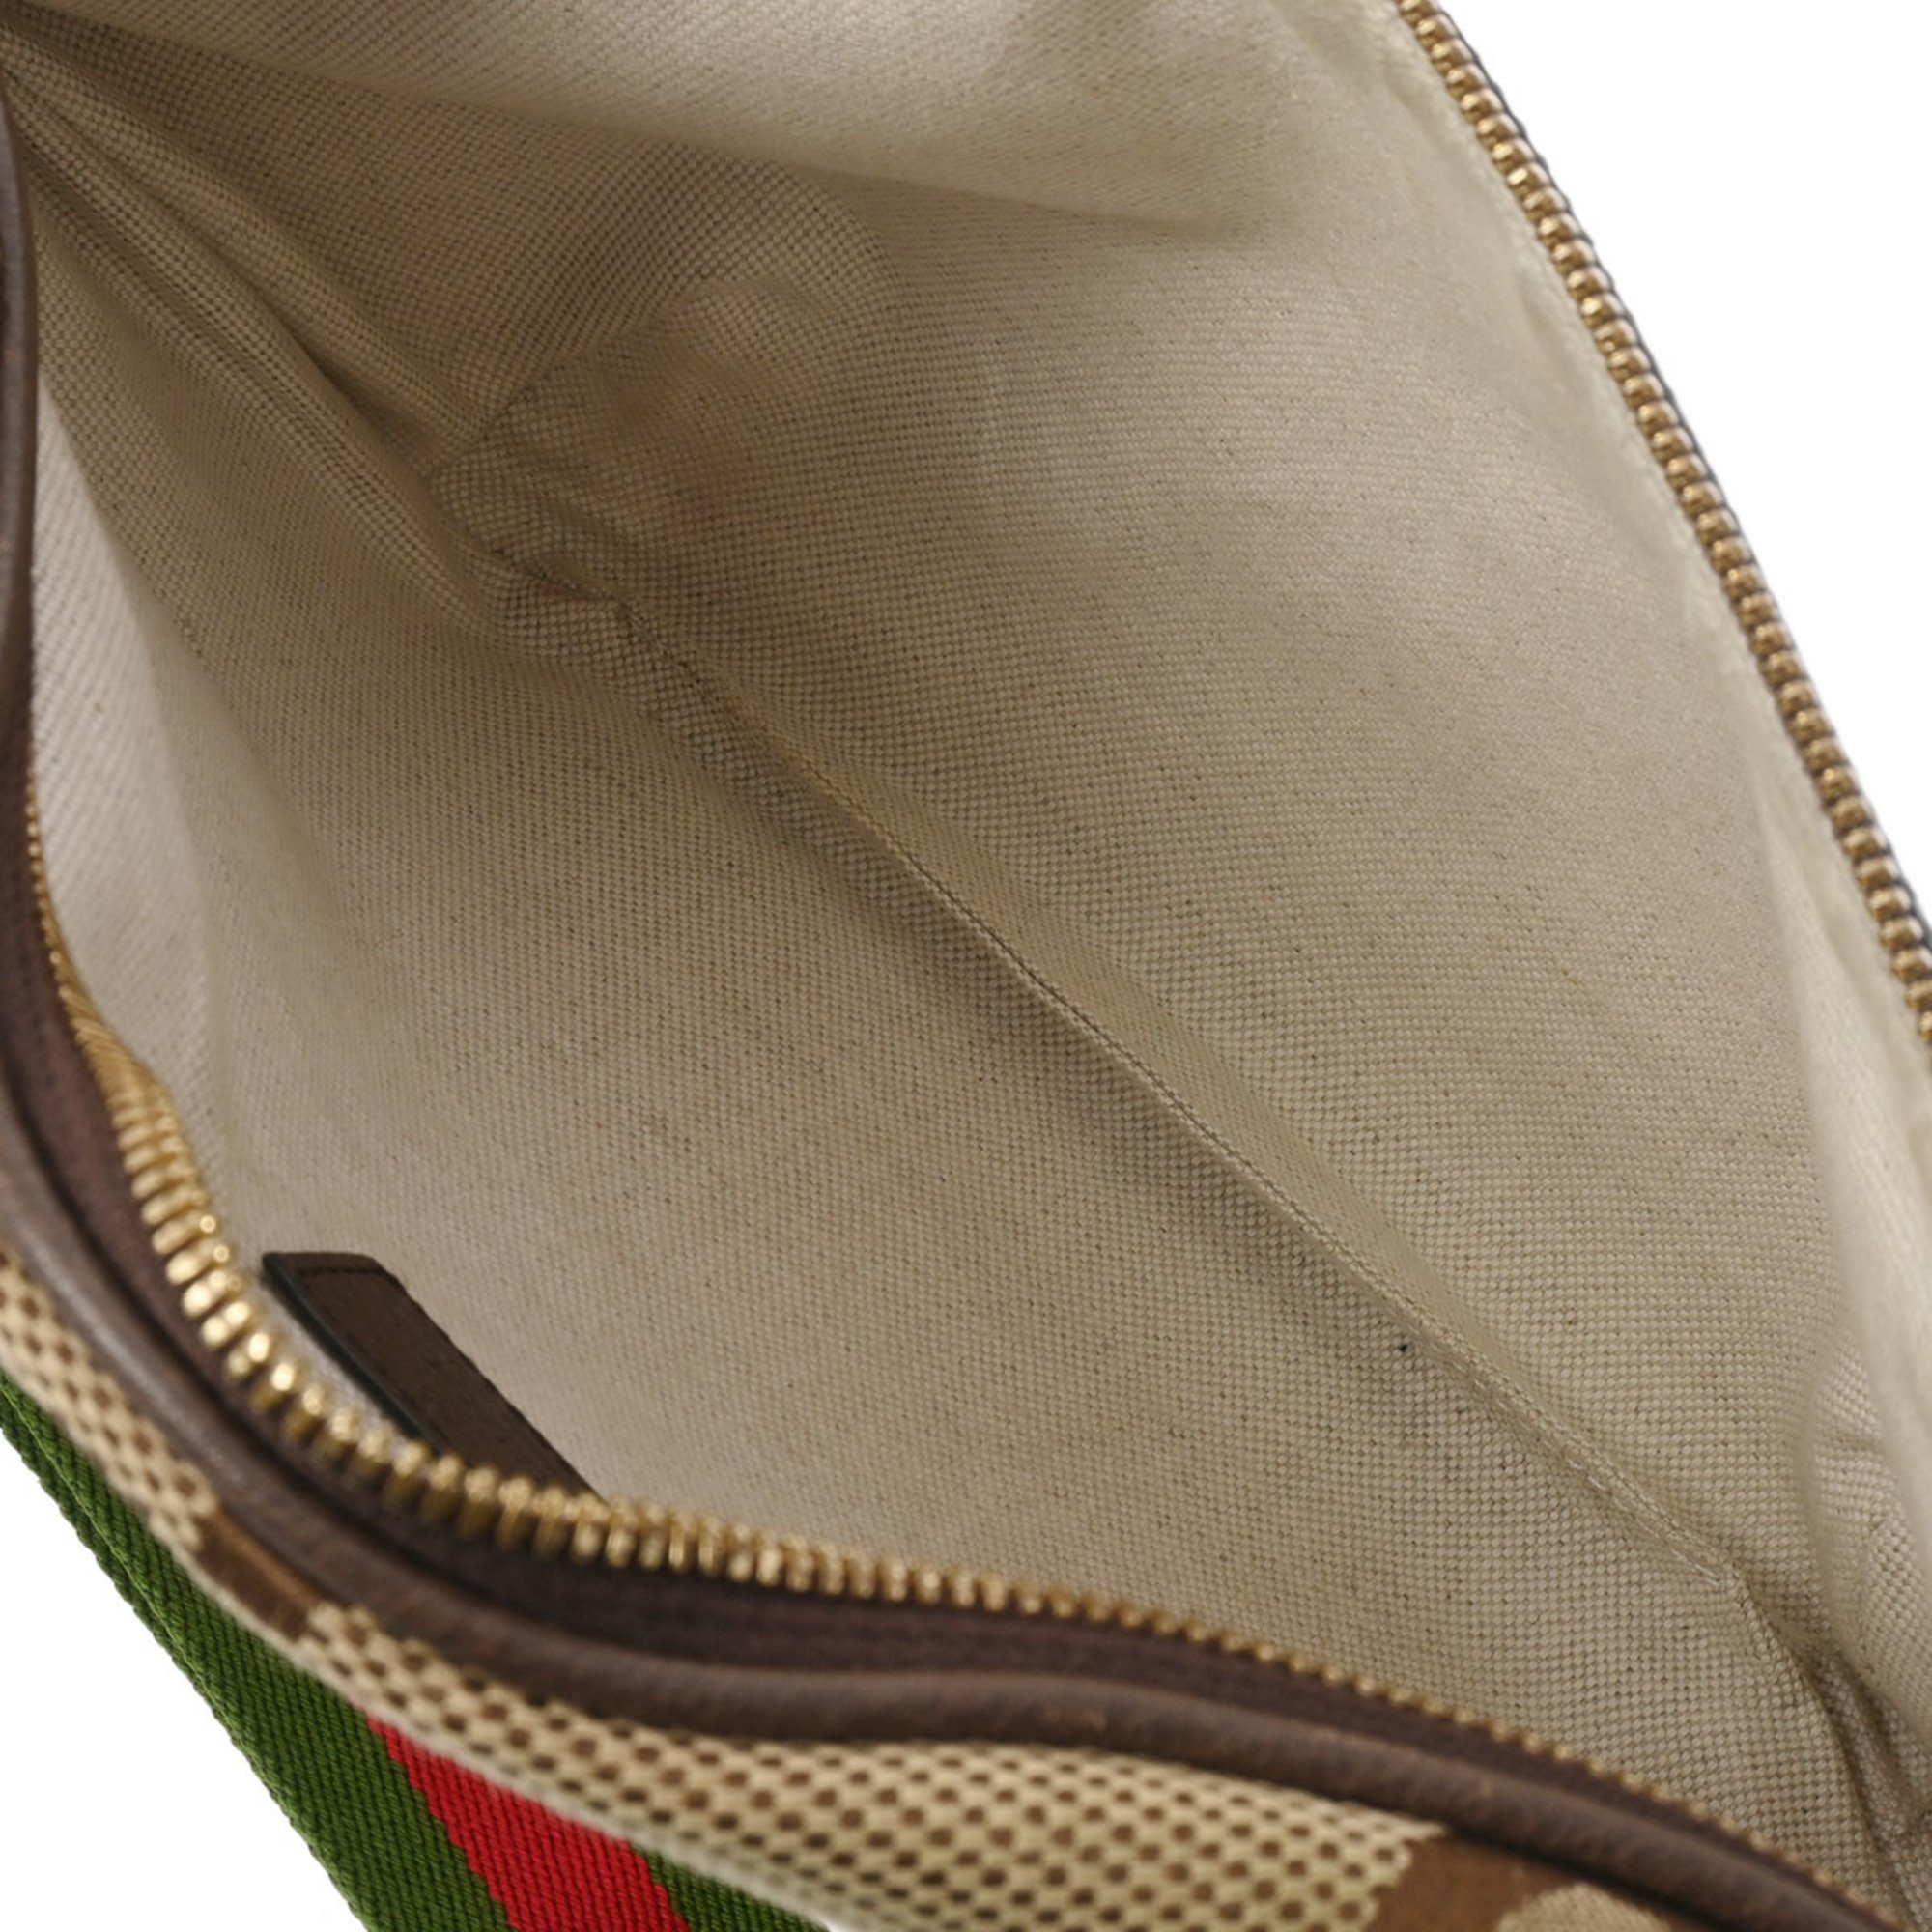 GUCCI Jumbo GG Belt Bag Beige 696031 Men's Canvas Leather Waist